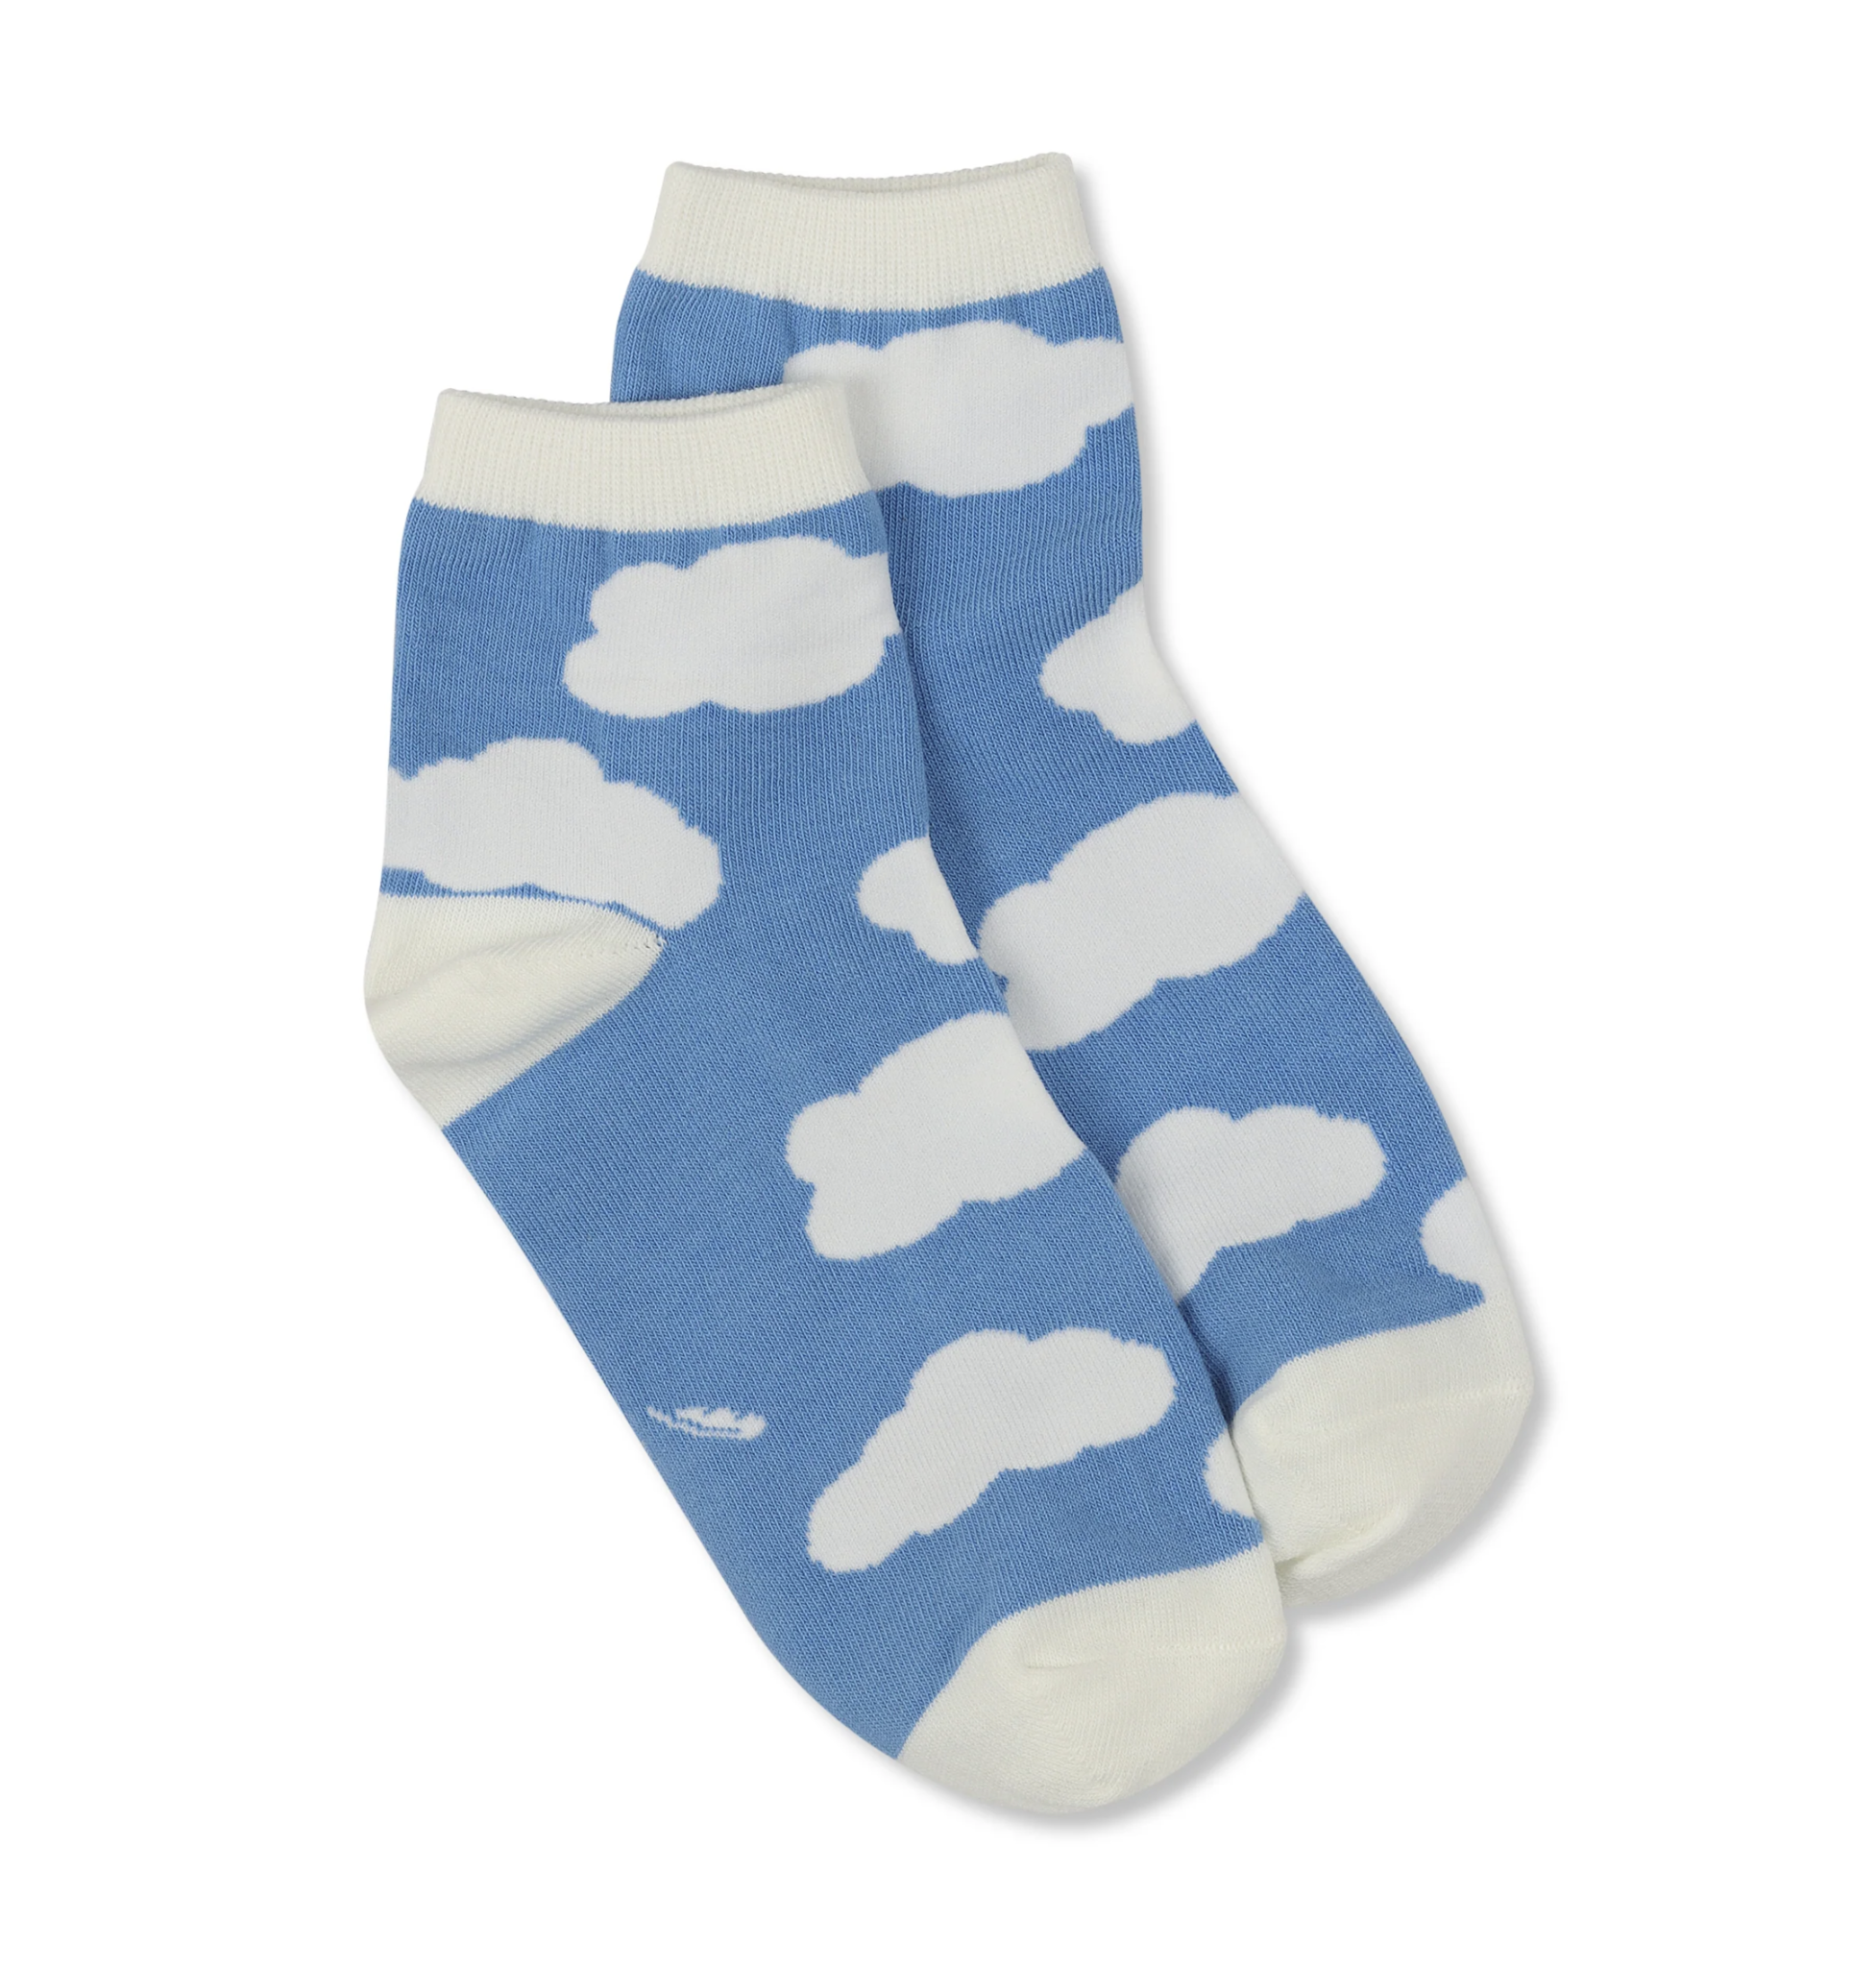 Lucky Clouds socks